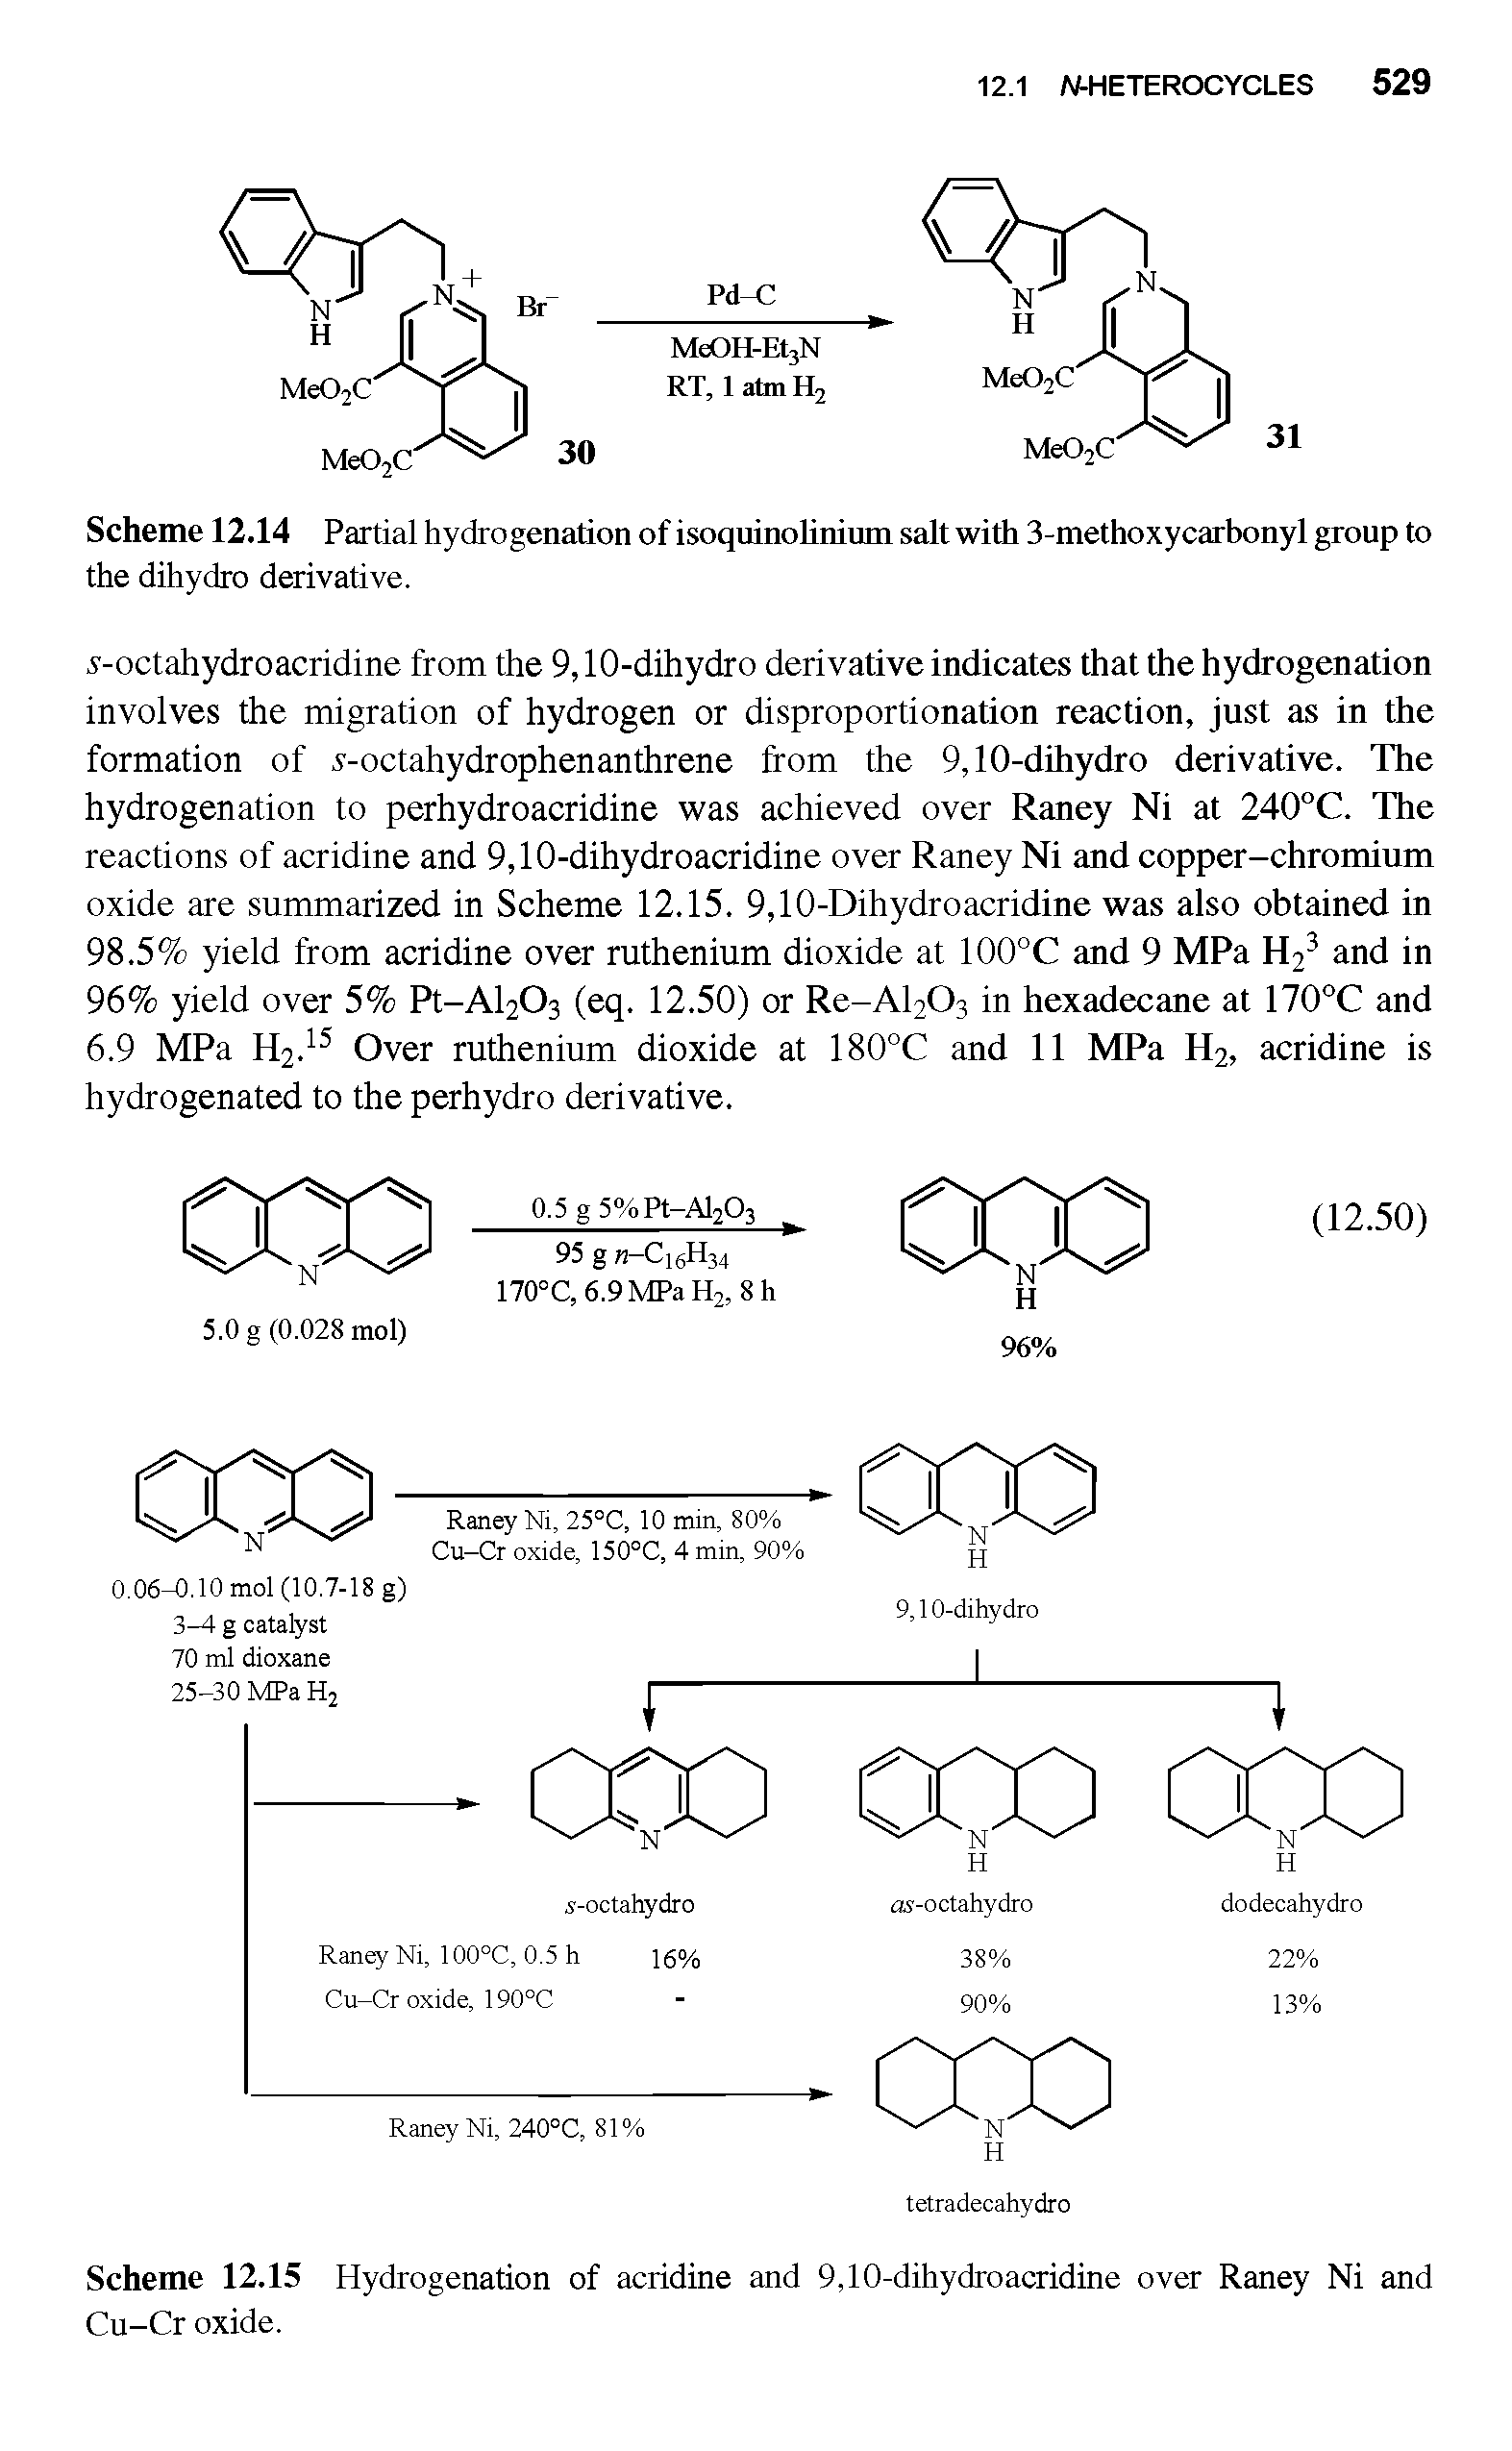 Scheme 12.15 Hydrogenation of acridine and 9,10-dihydroacridine over Raney Ni and Cu-Cr oxide.